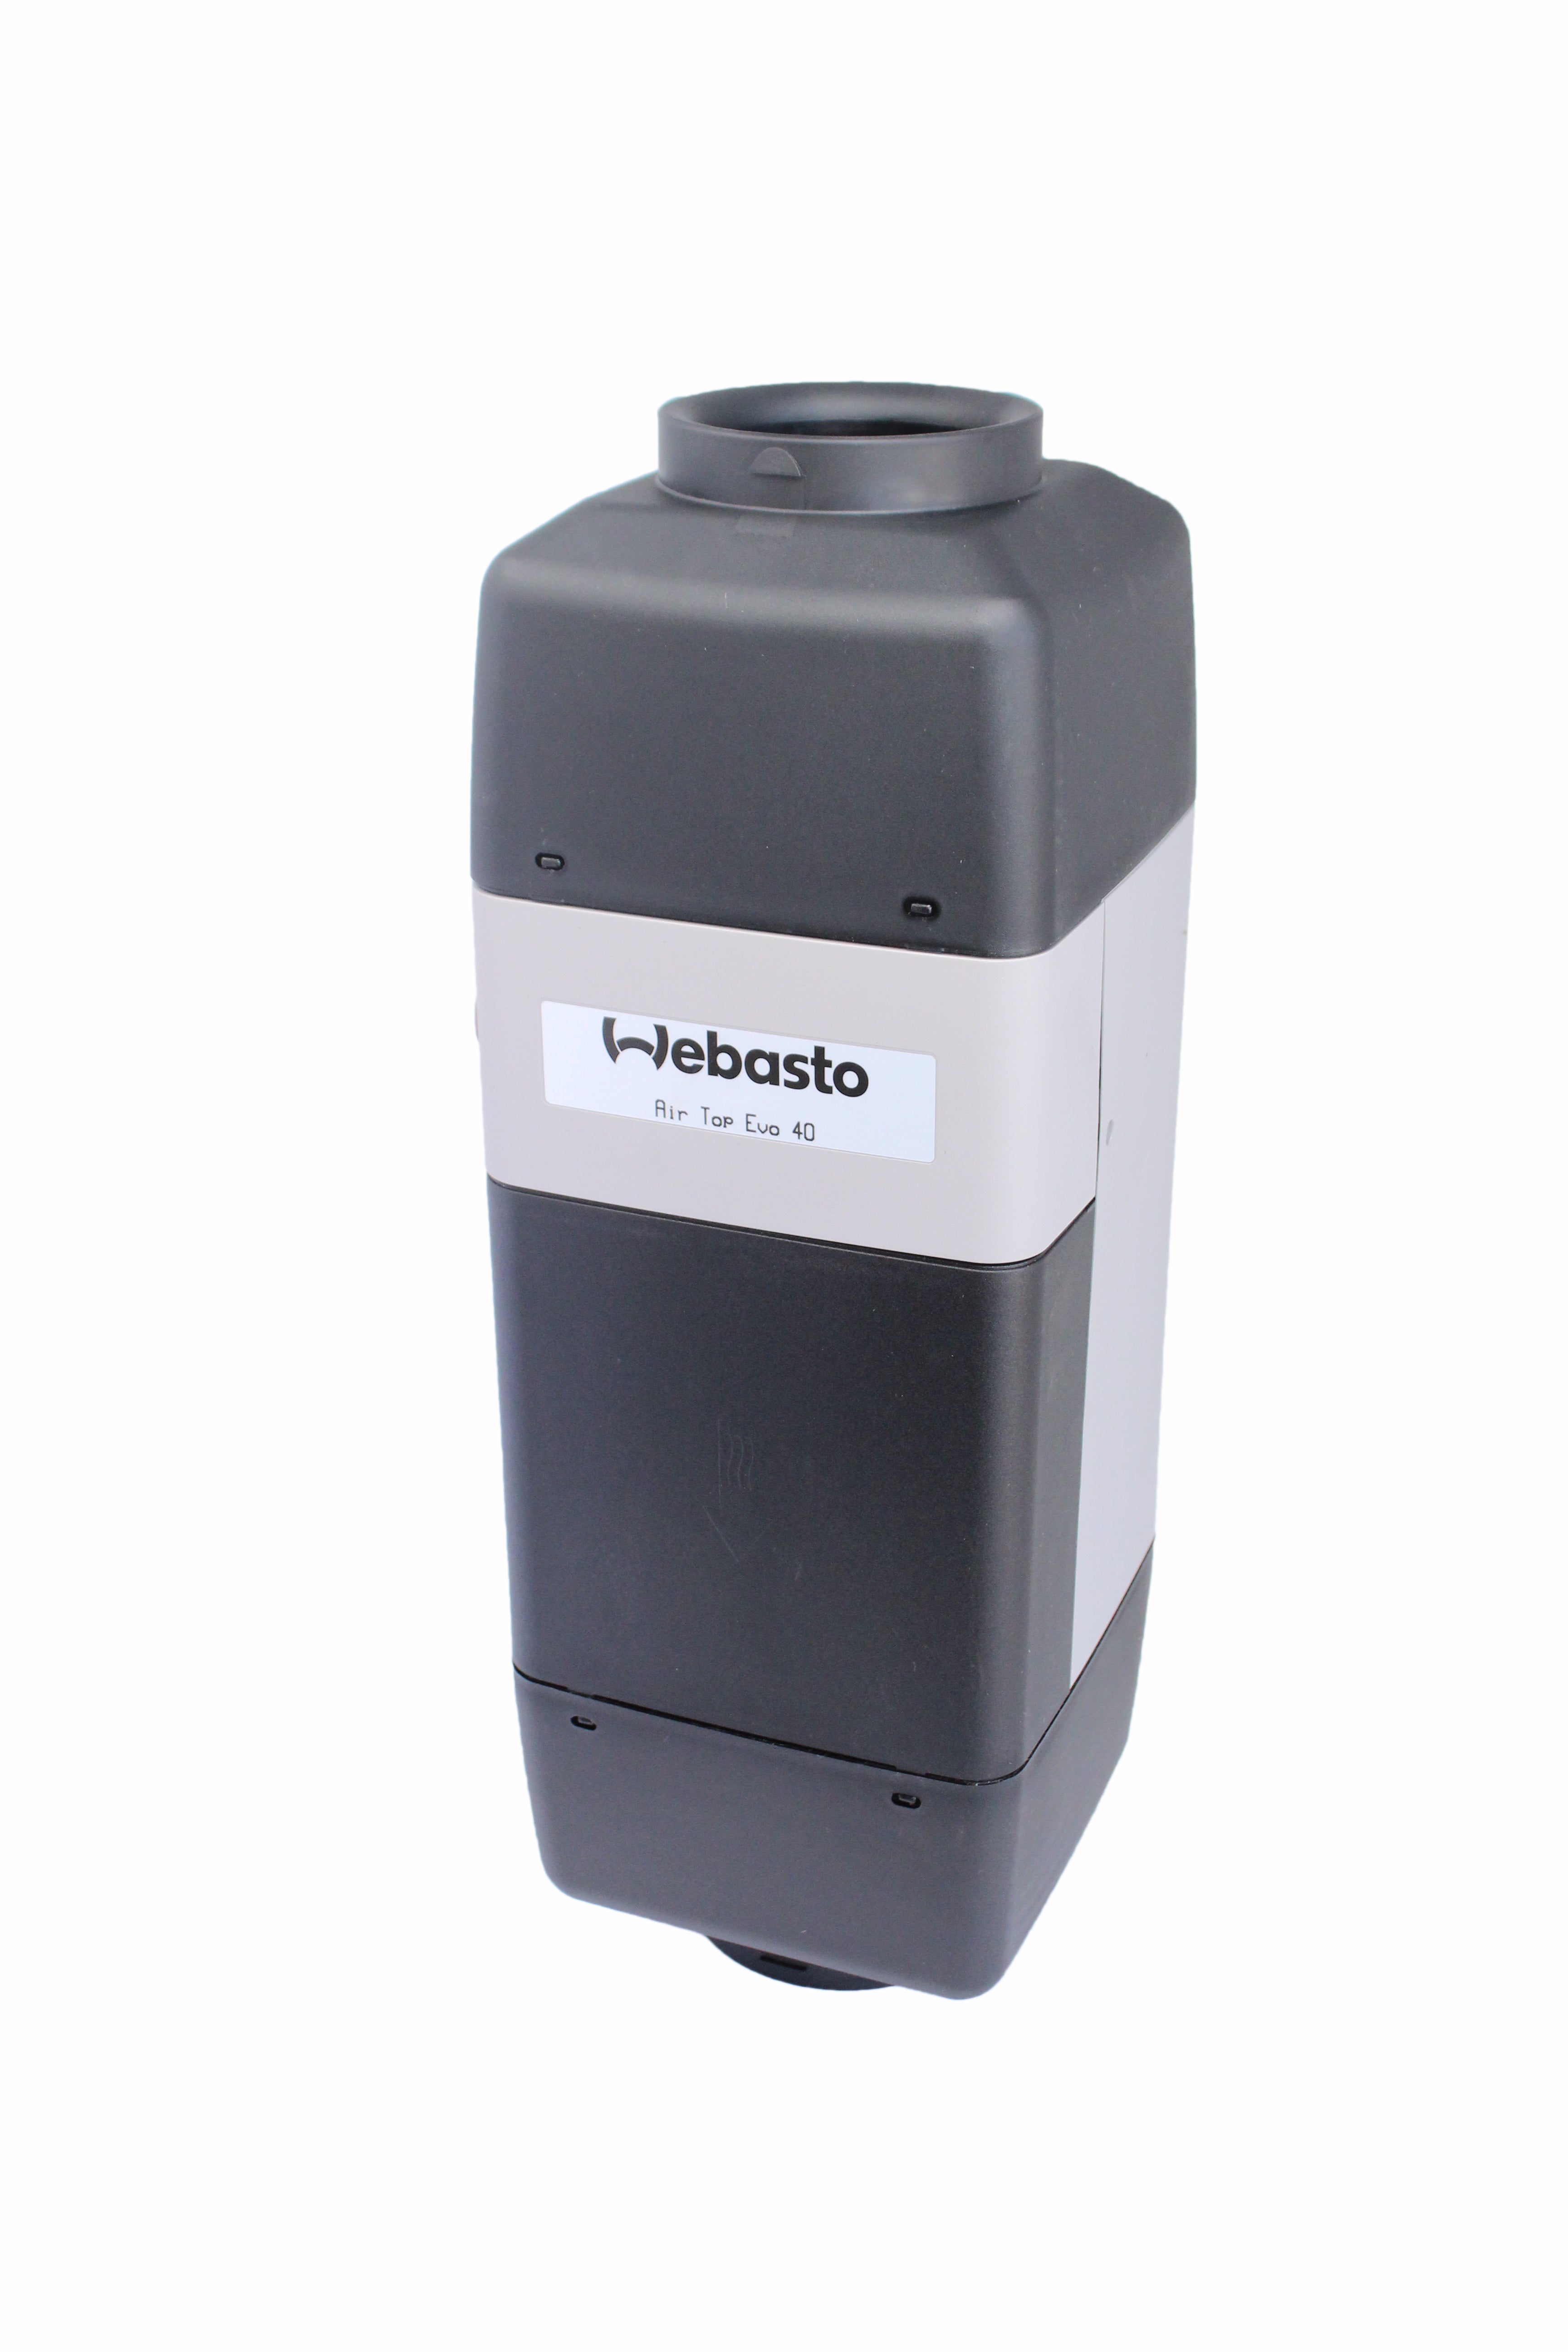 Van Life Webasto 4Kw Gasoline Air Heater Kit For Promaster Sprinter 90-3-0019